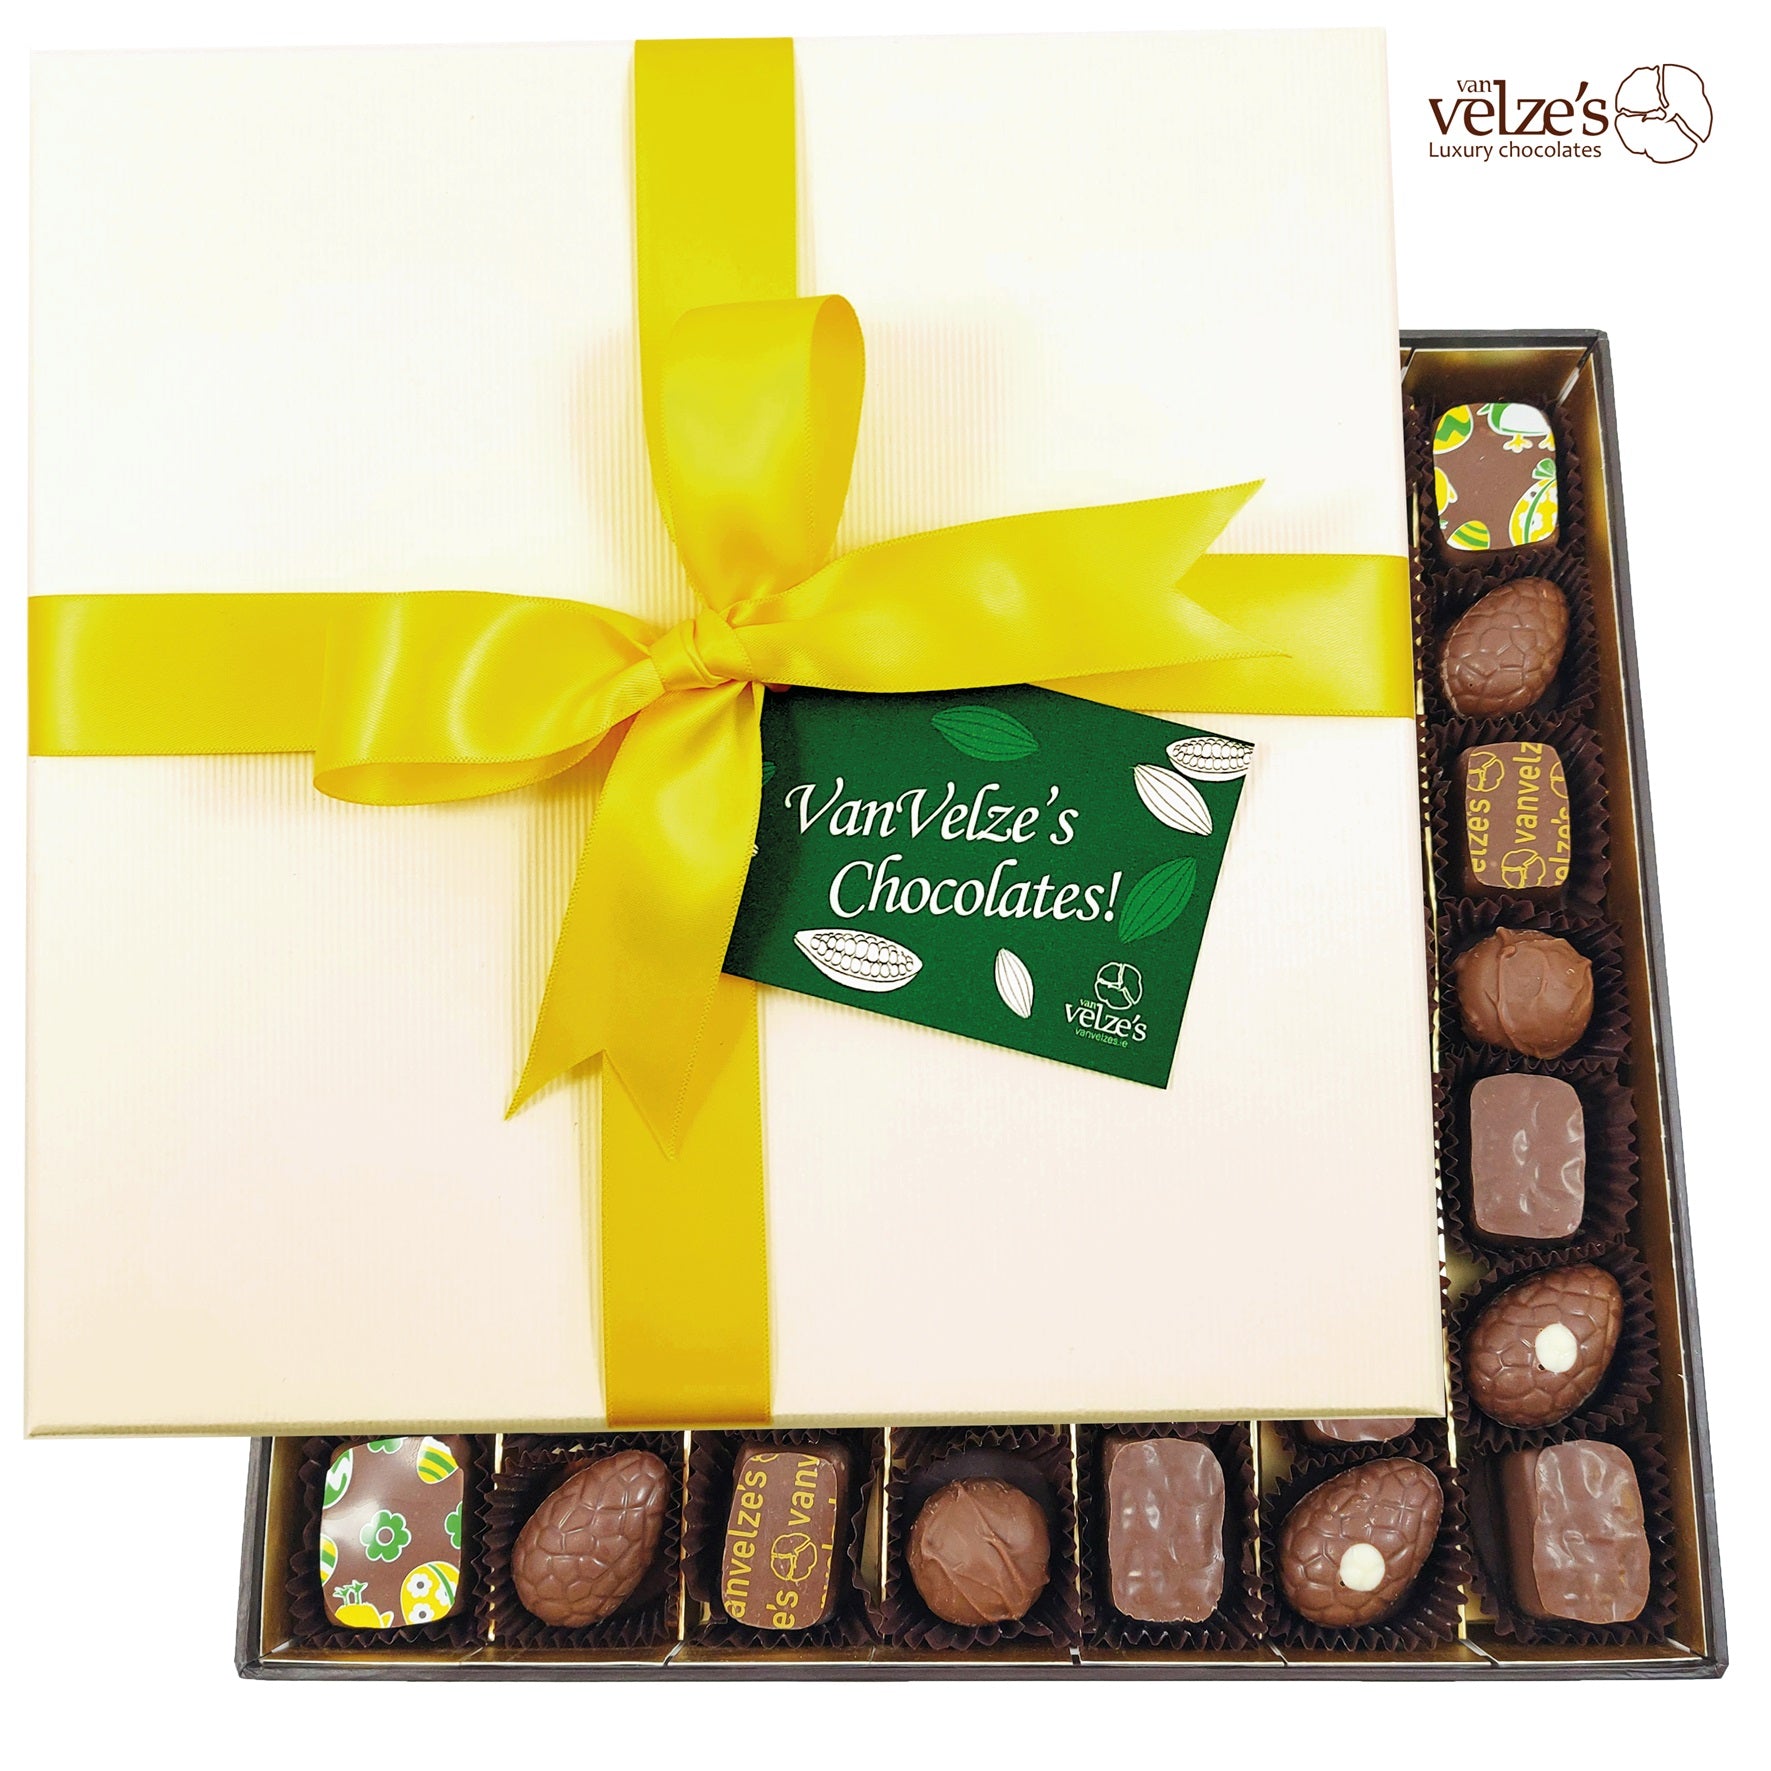 Gift from Mayo Ireland, Chocolate gifts, Easter gifts, West of Ireland, Ireland, County Mayo, Luxury chocolates, Artisan chocolates